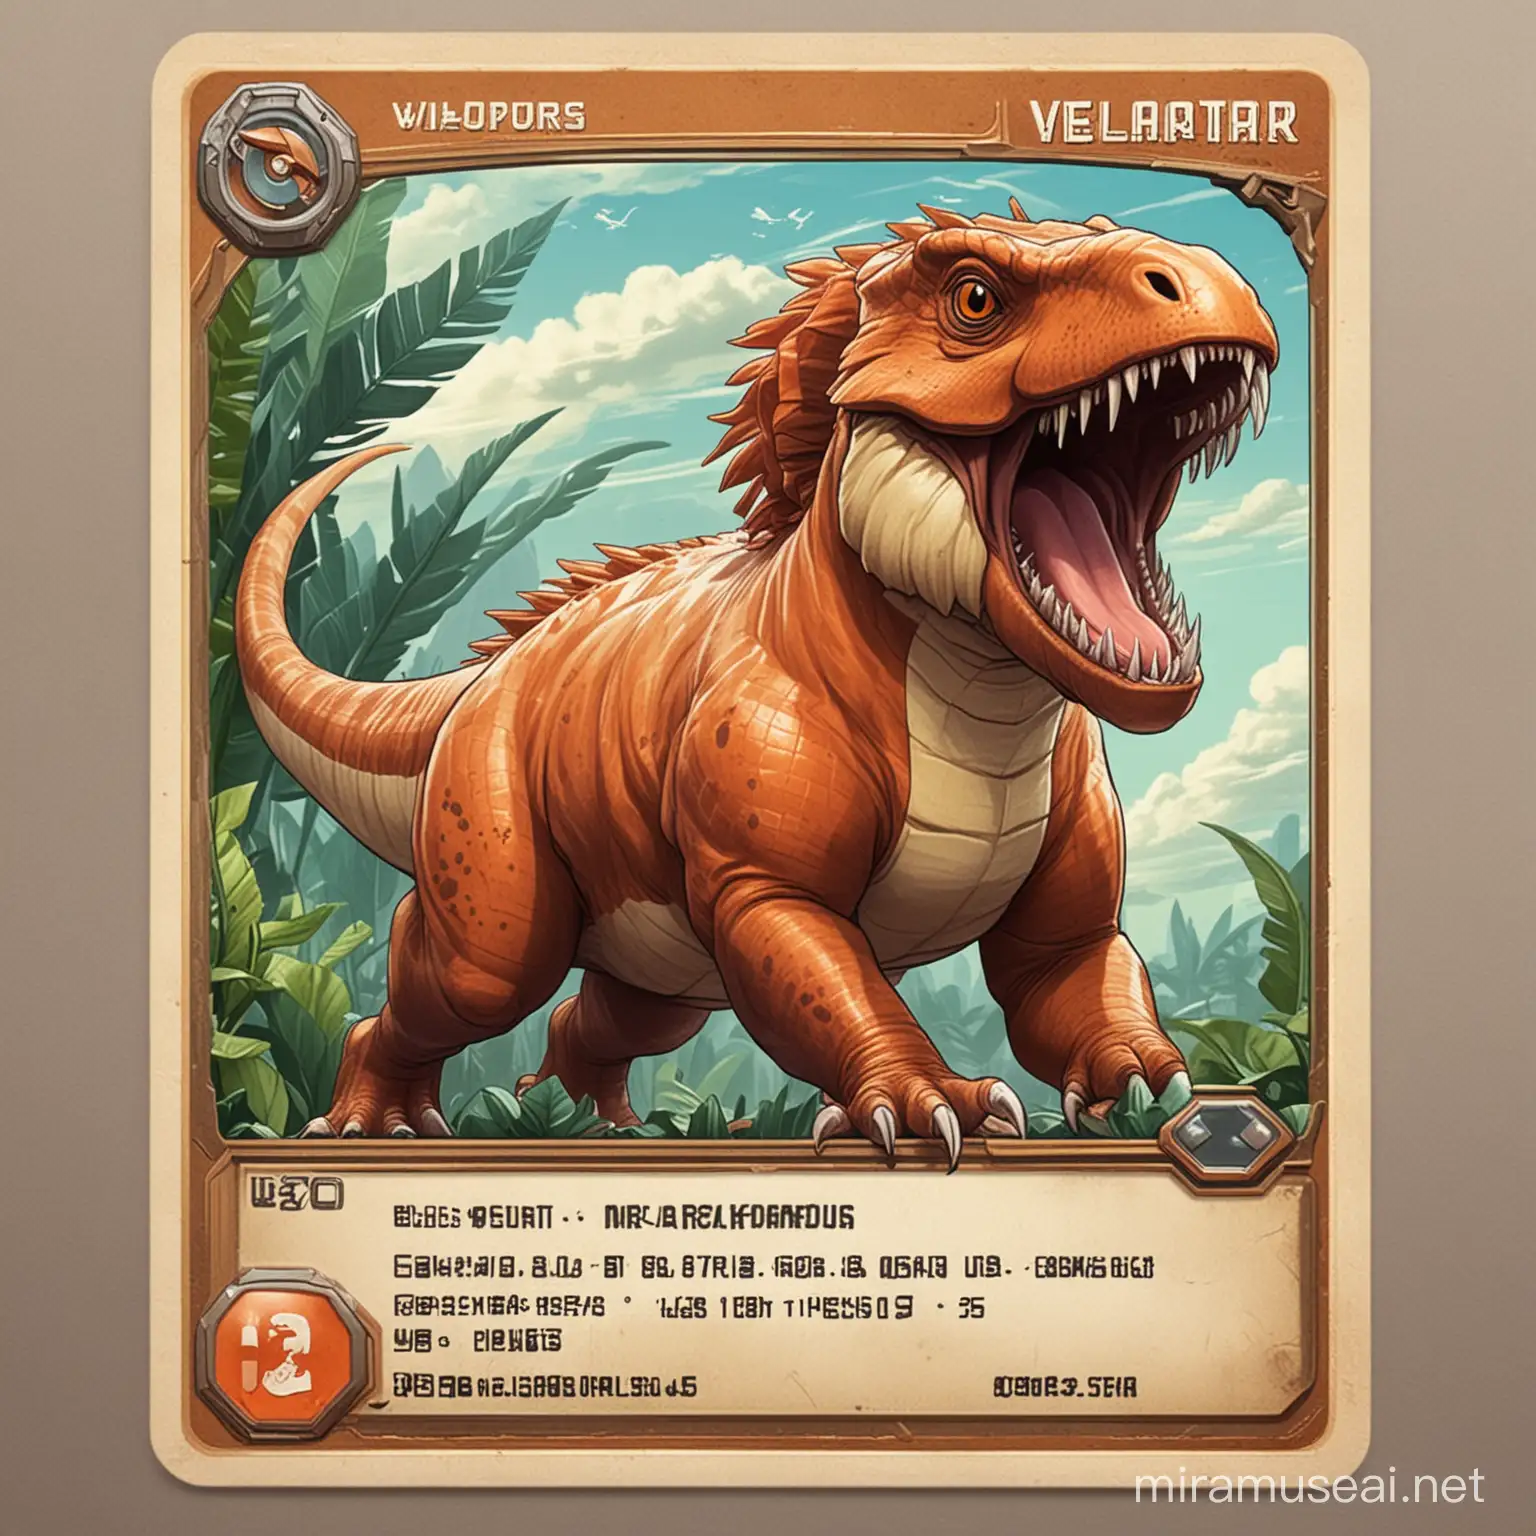 Velocilerus Vibrant VelociraptorWalrus Hybrid Trading Card with Power and Speed Stats